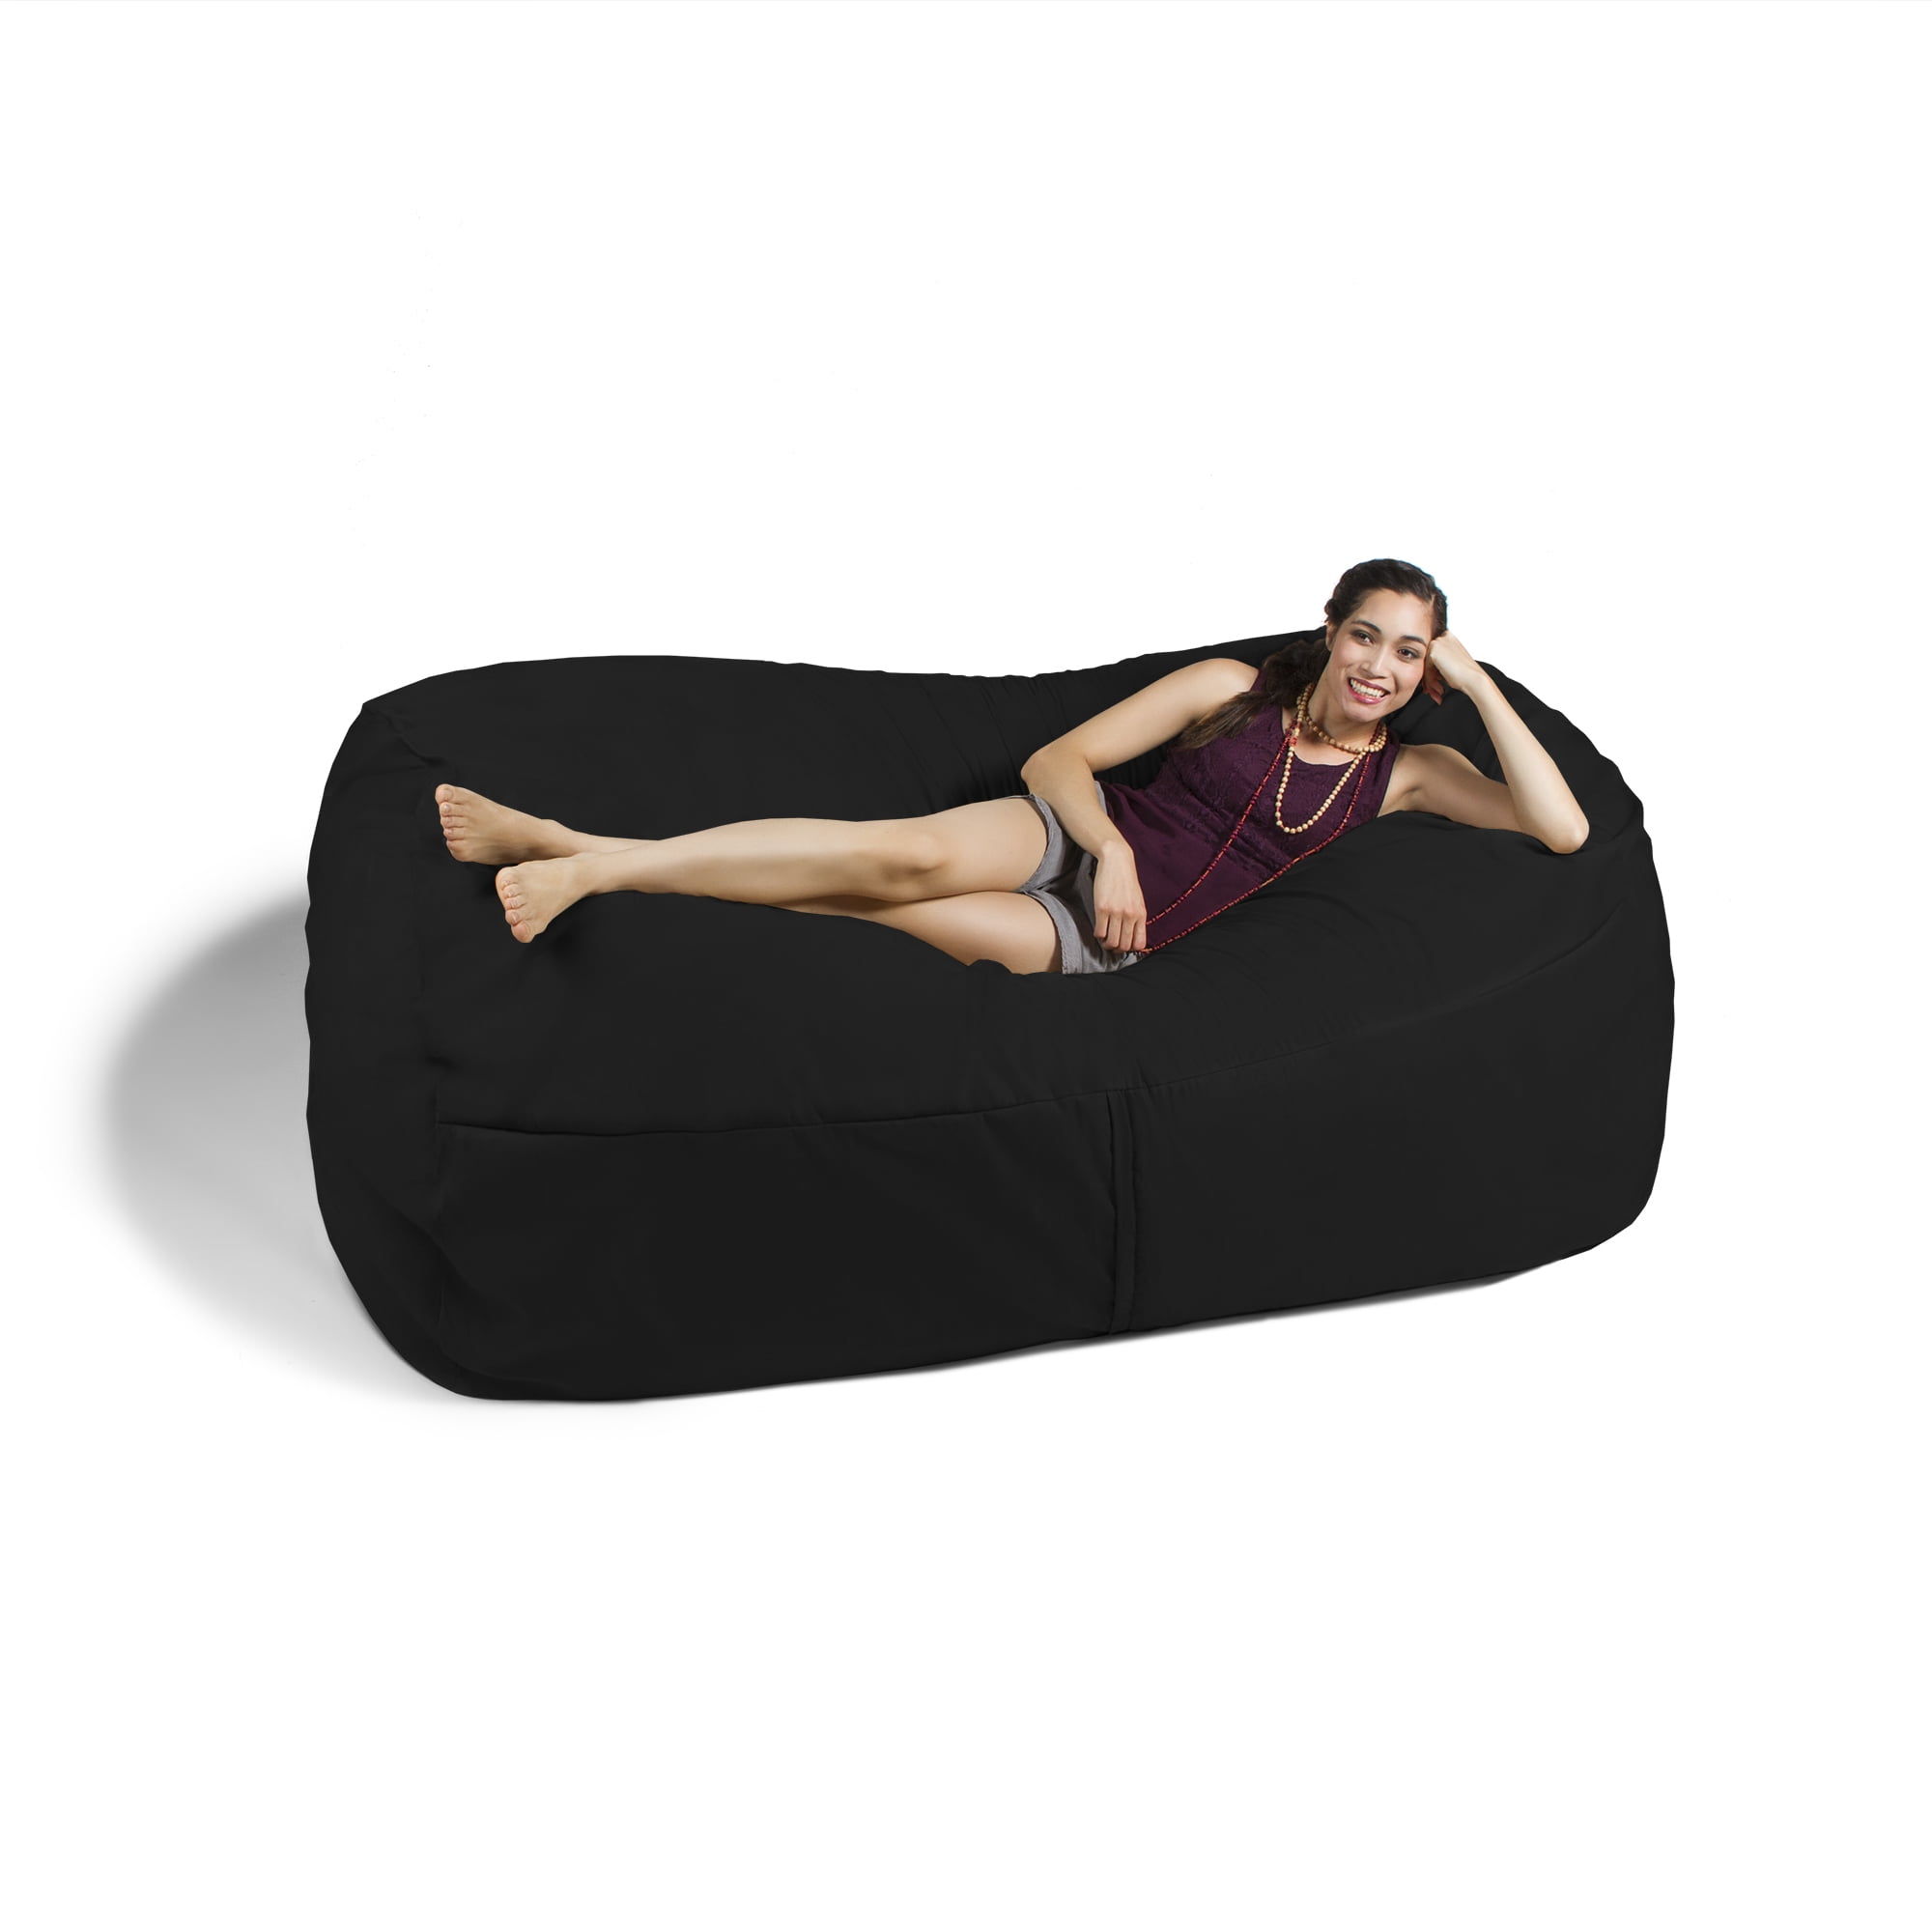 Giant Black Bean Bag Chair 7FT Extra Large Adult Oversized Dorm